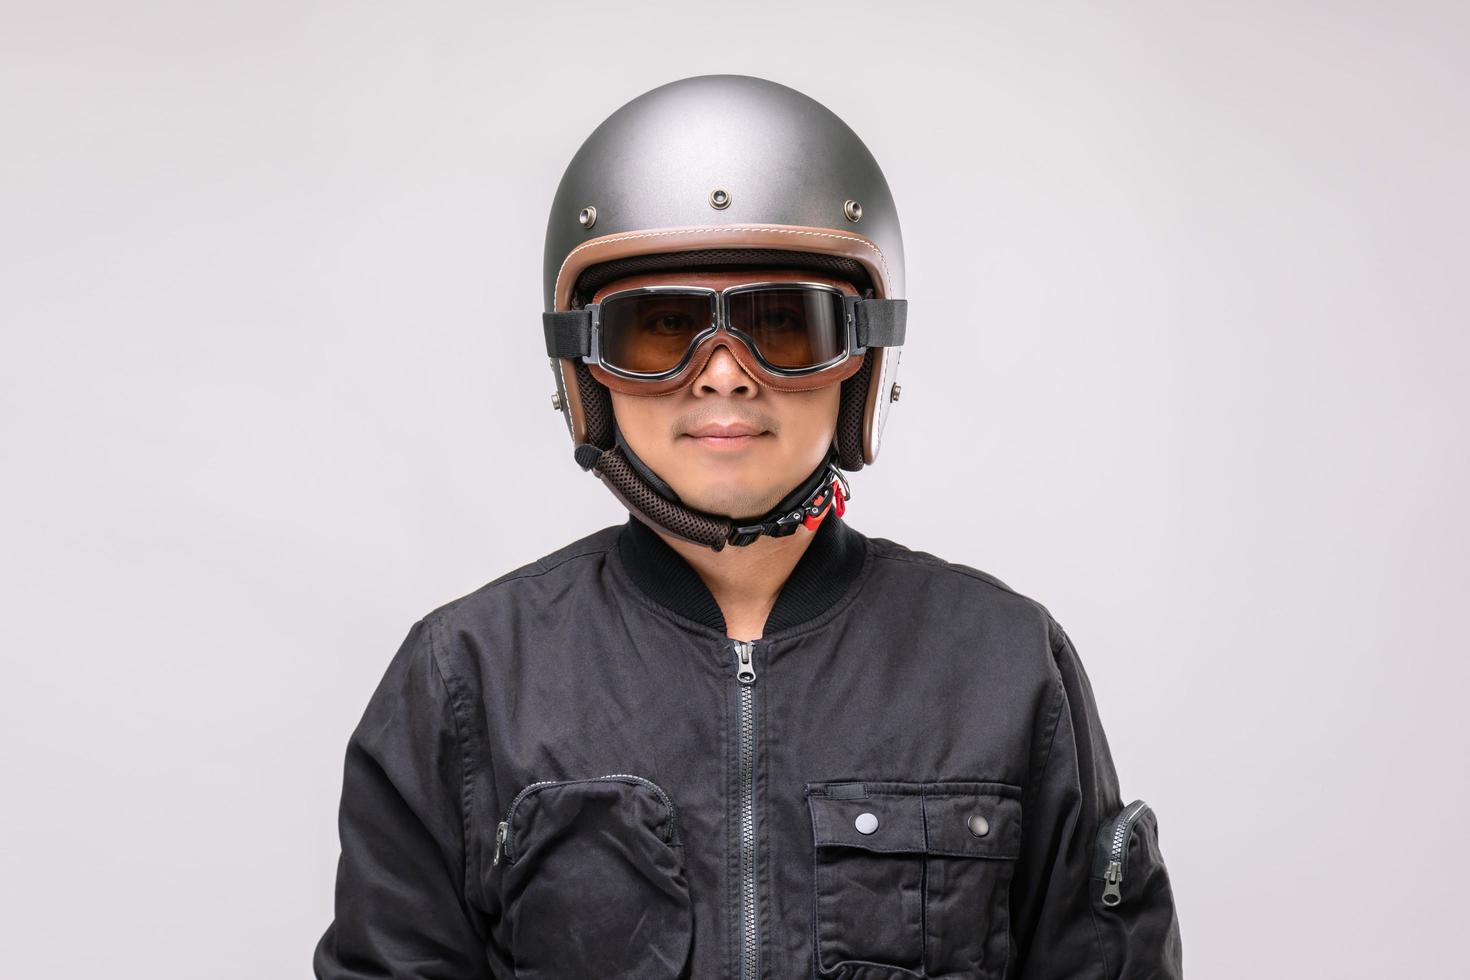 motociclista o jinete con casco antiguo. concepto de viaje seguro. foto de estudio en gris